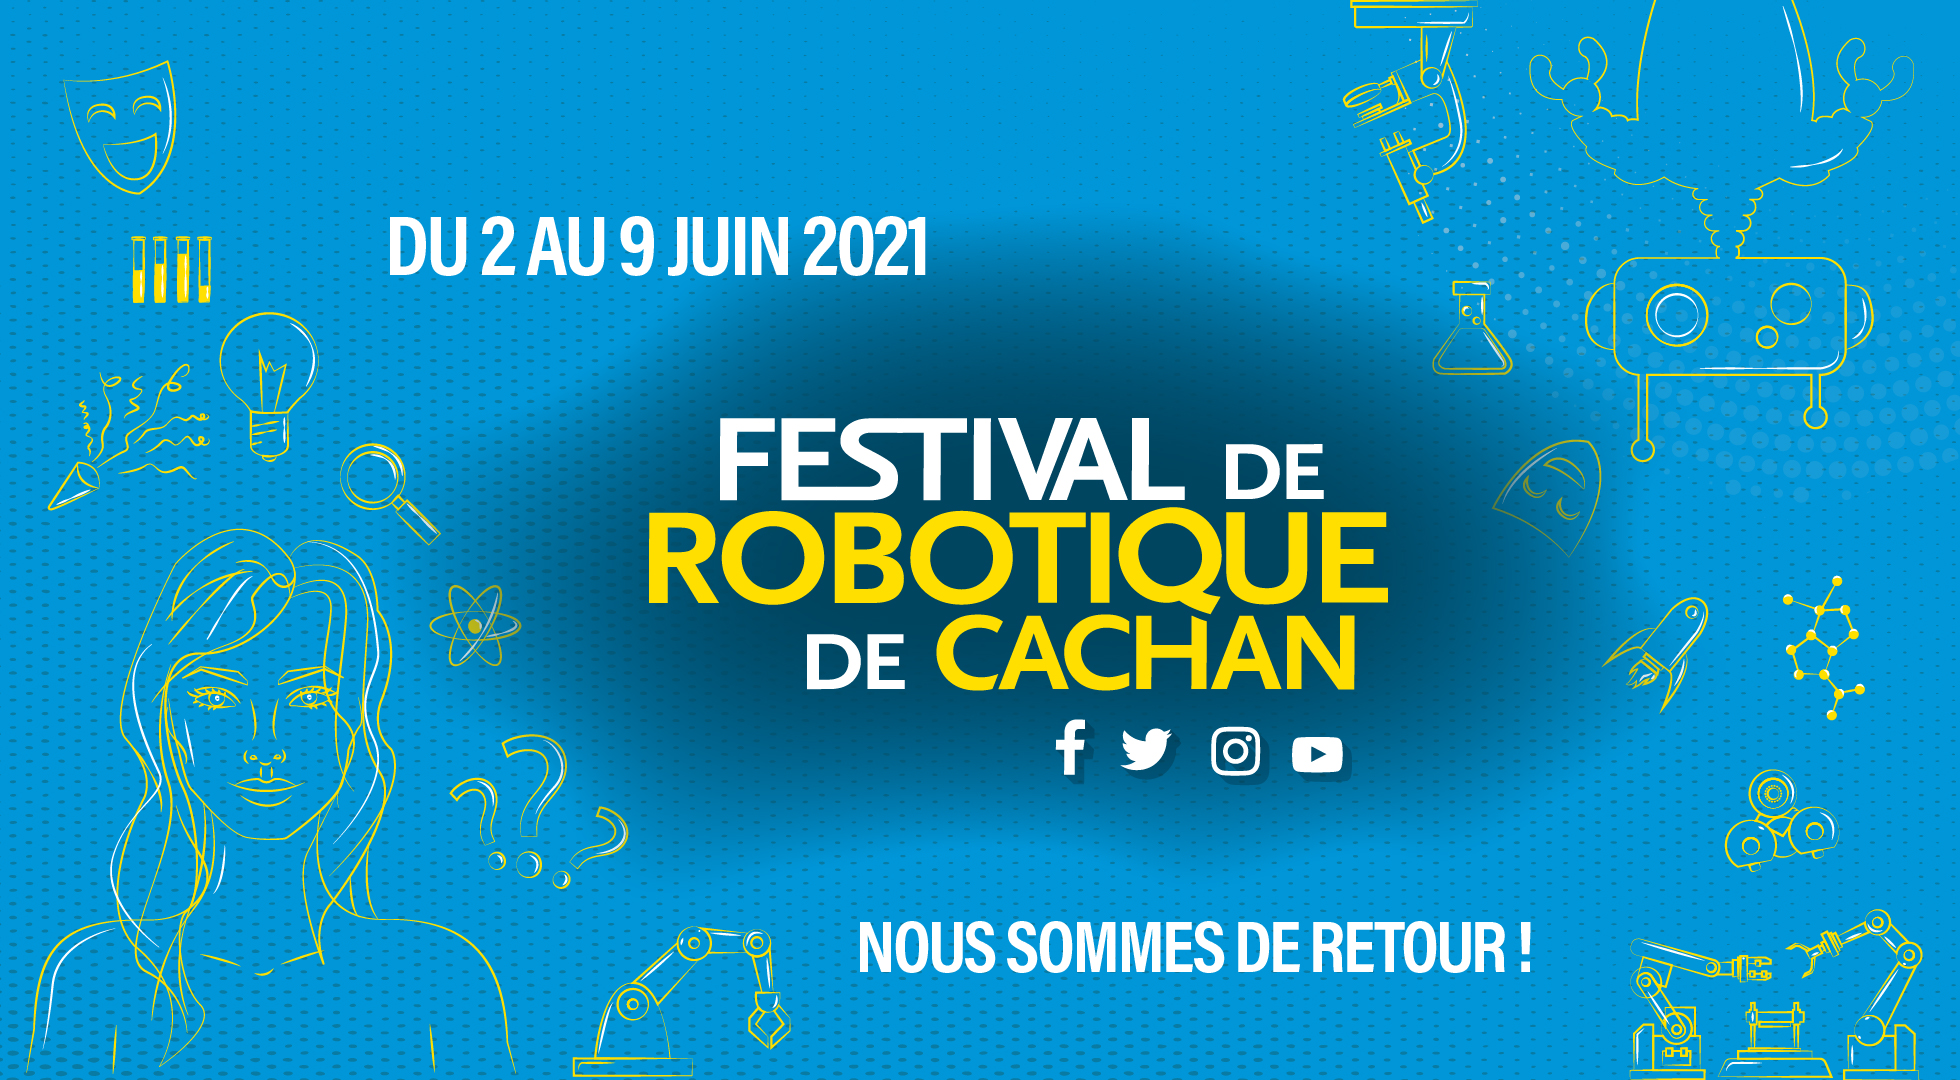 aivancity, a partner of the Robotics Festival of Cachan 